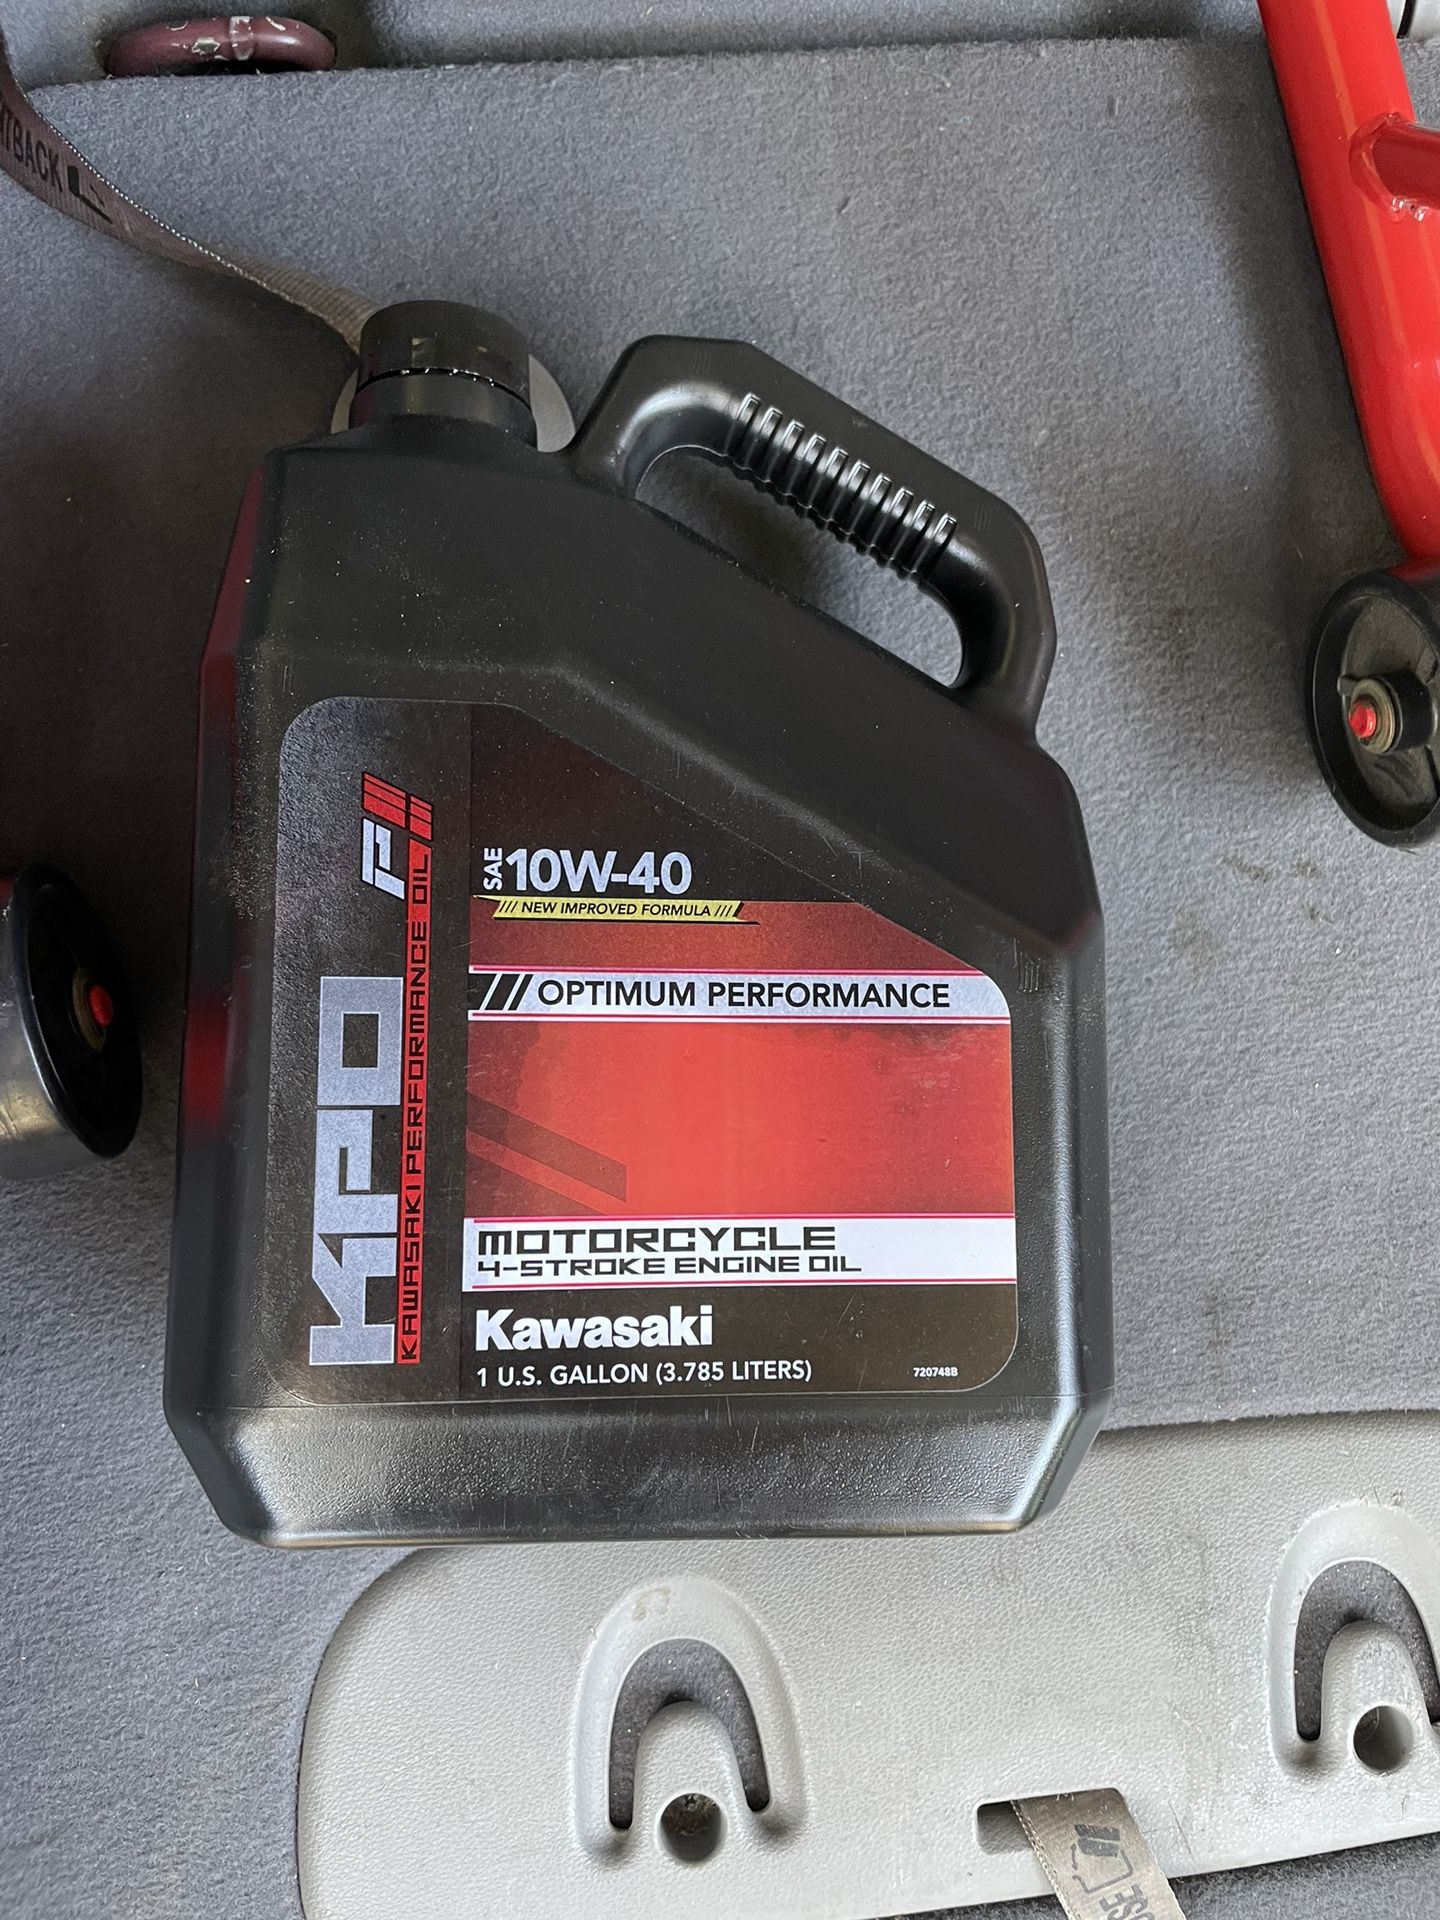 Kawasaki Performance Oil